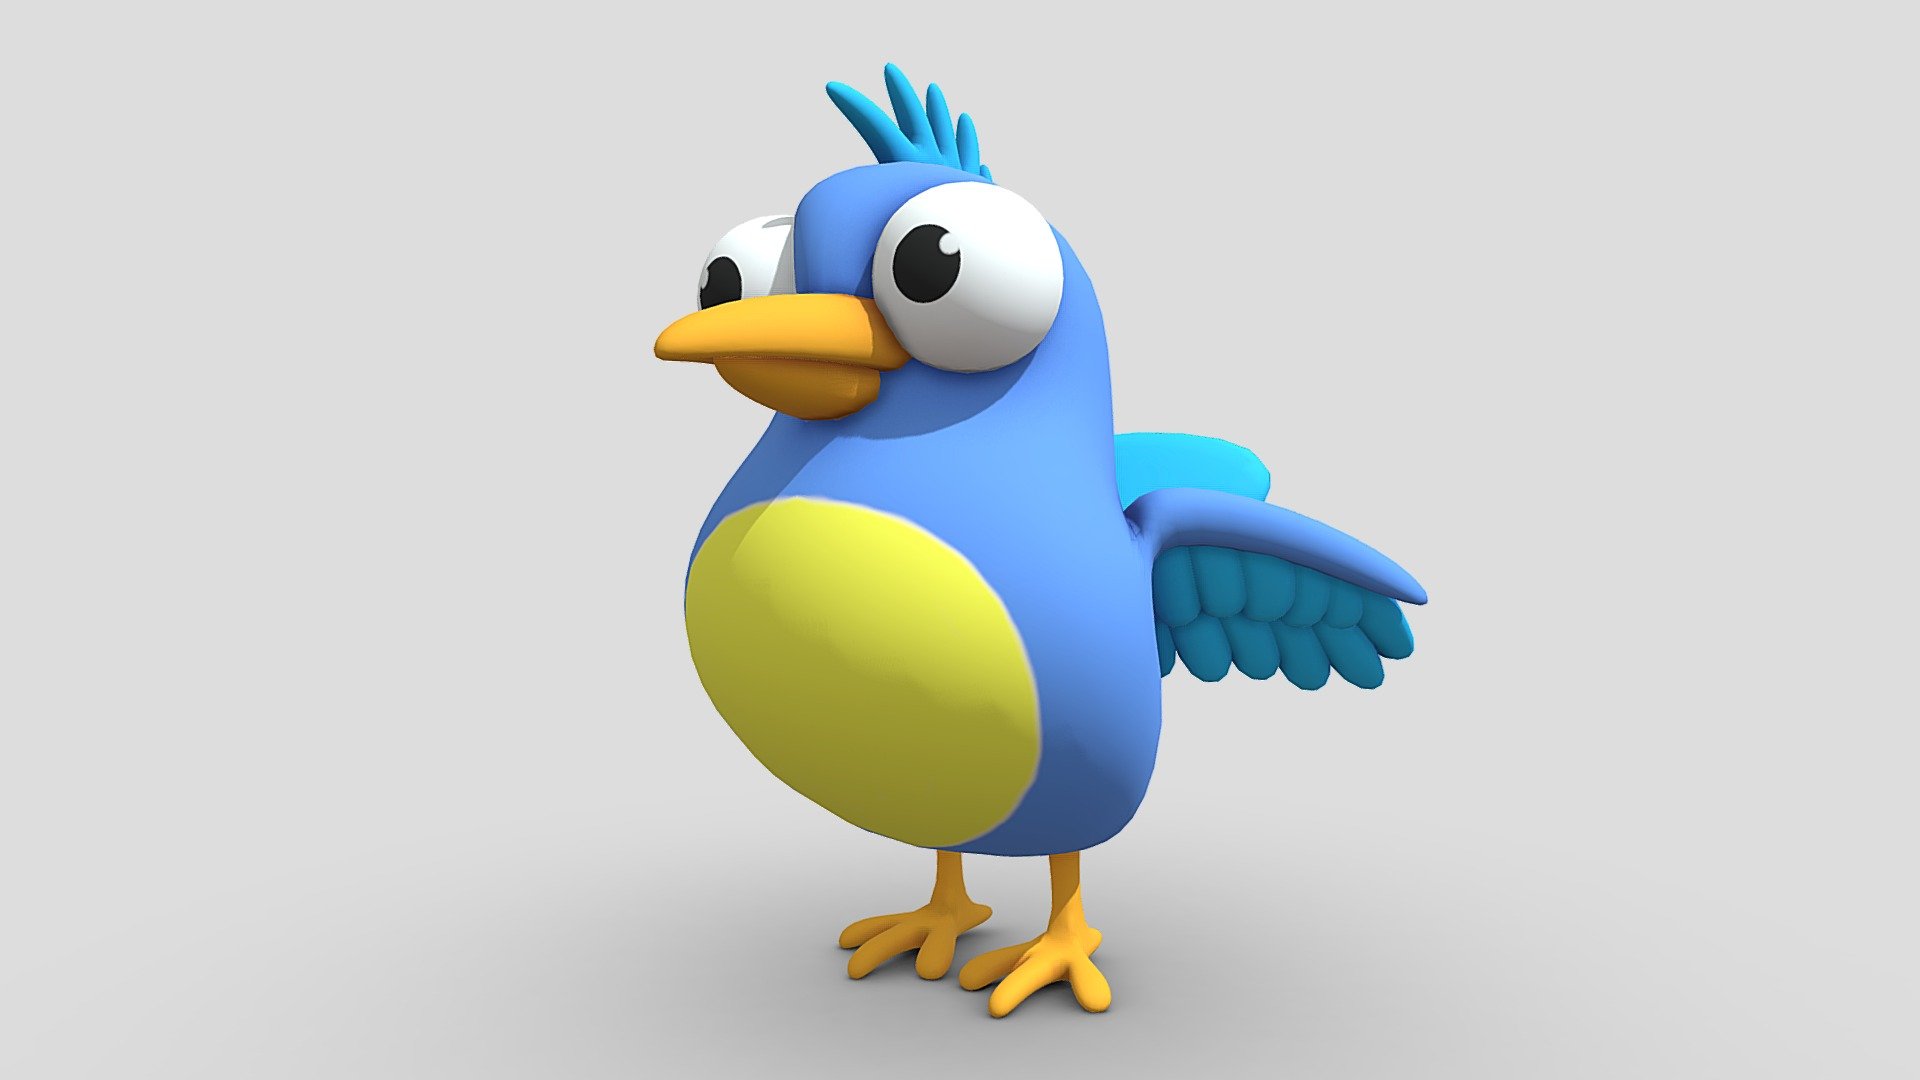 low poly 3d model of a cute bird - Cartoon Bird - Buy Royalty Free 3D model by assetfactory 3d model